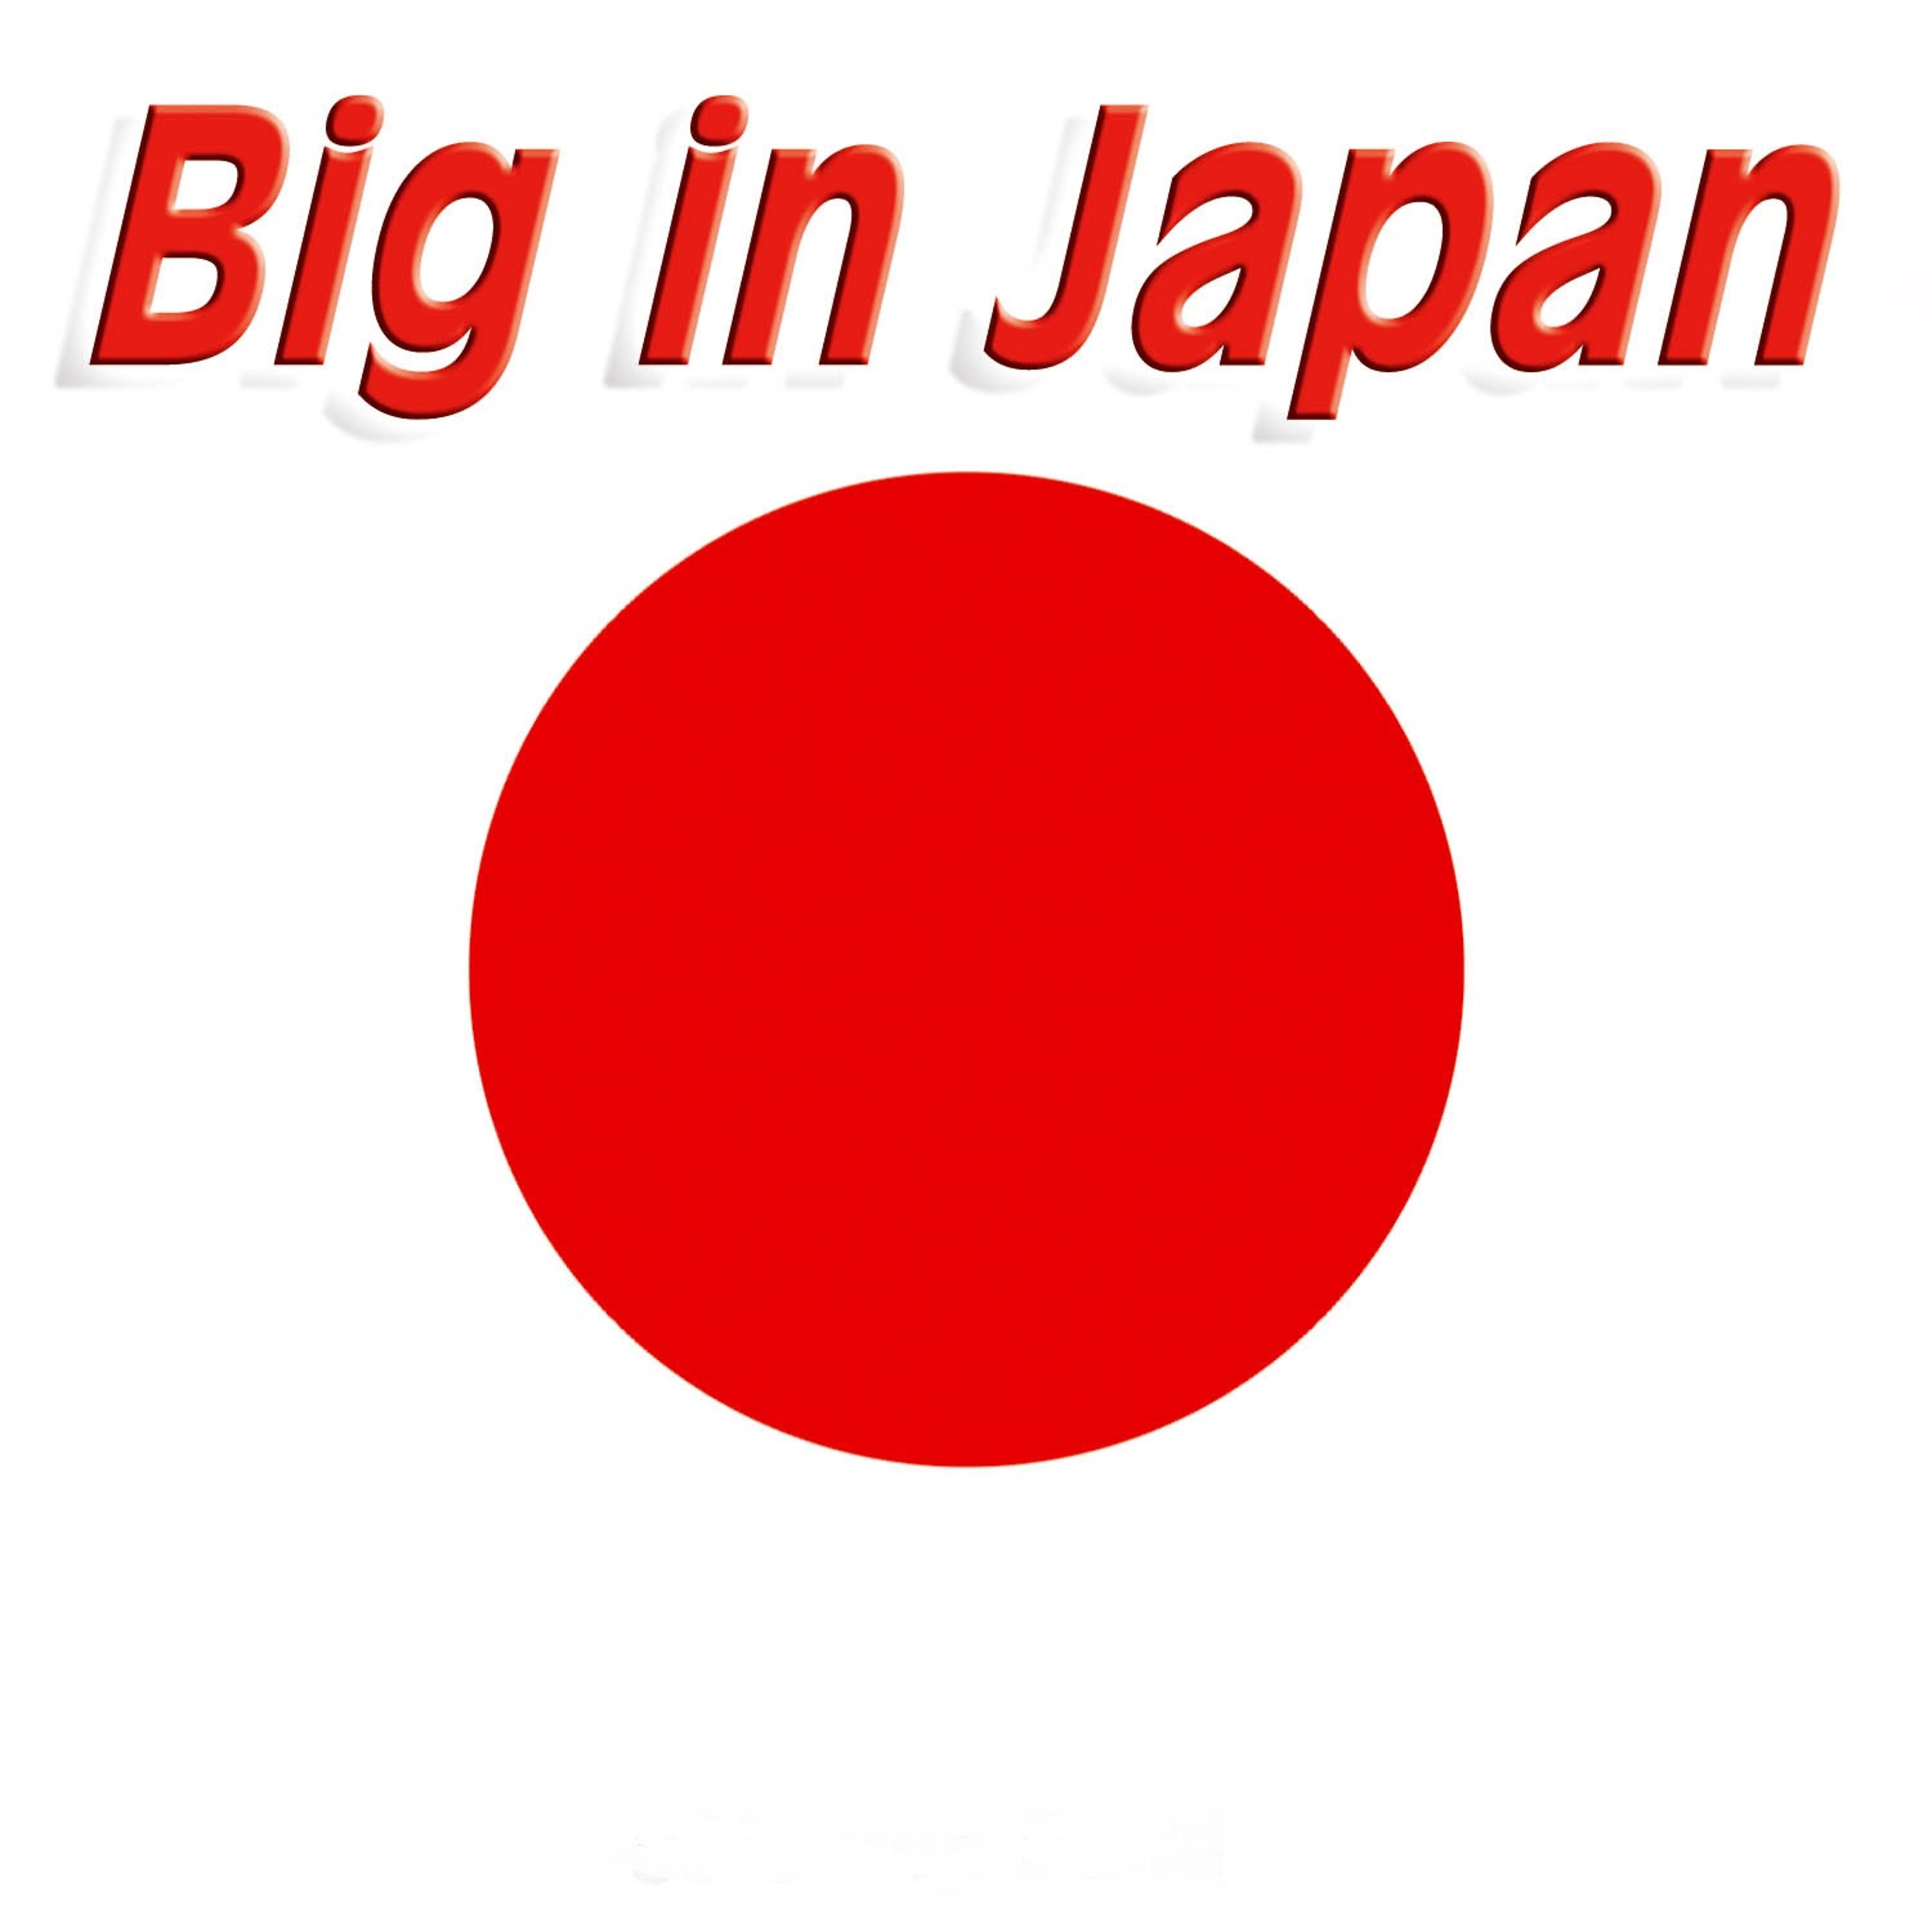 Big in Japan. Big in Japan альбом. Niginjaan. Big in Japan Single.